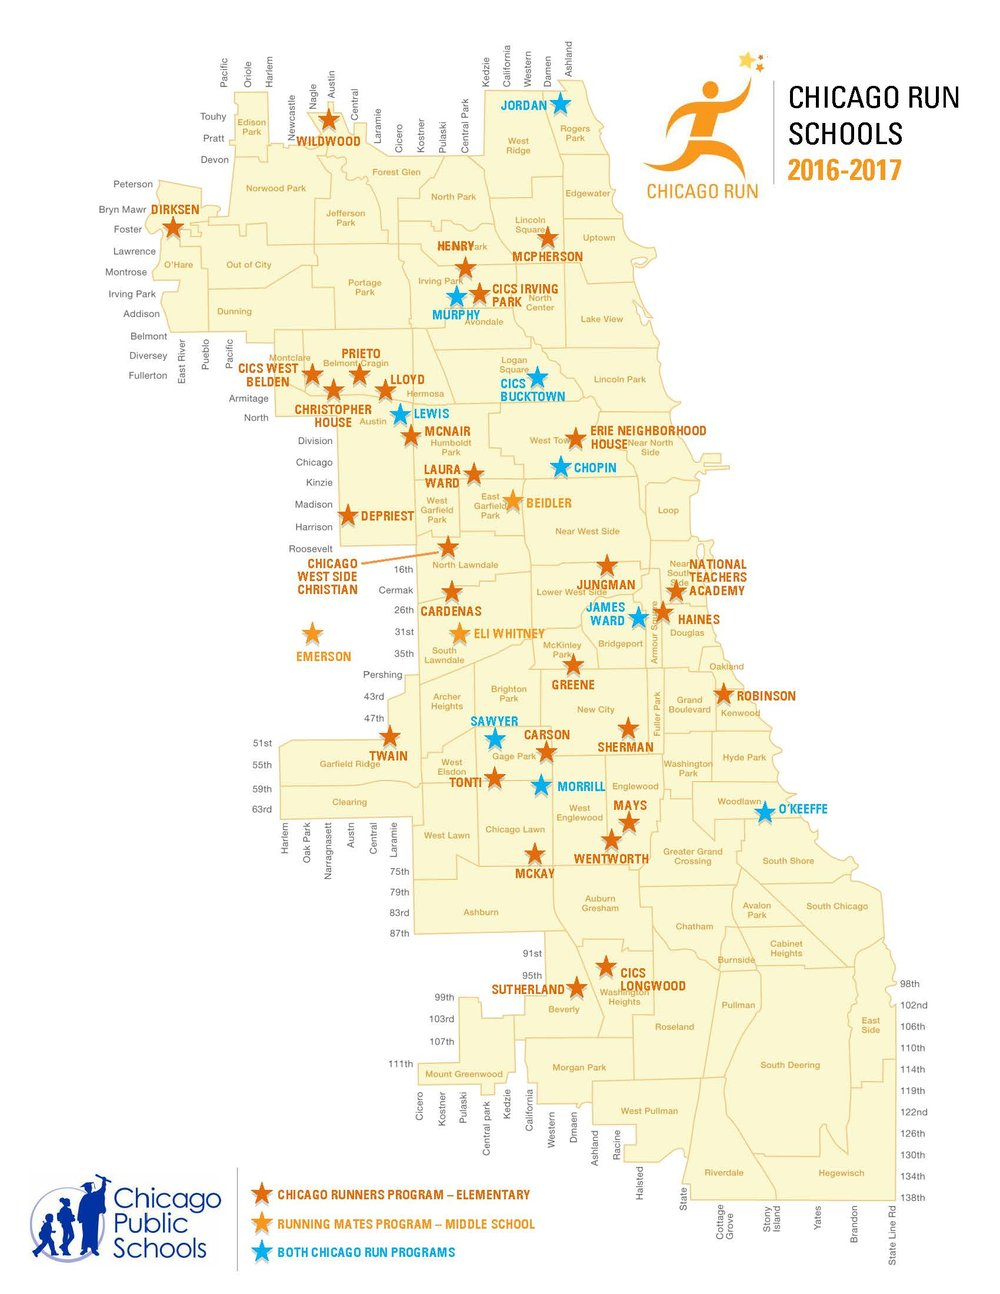 Chicago Runs schools, 2016-2017